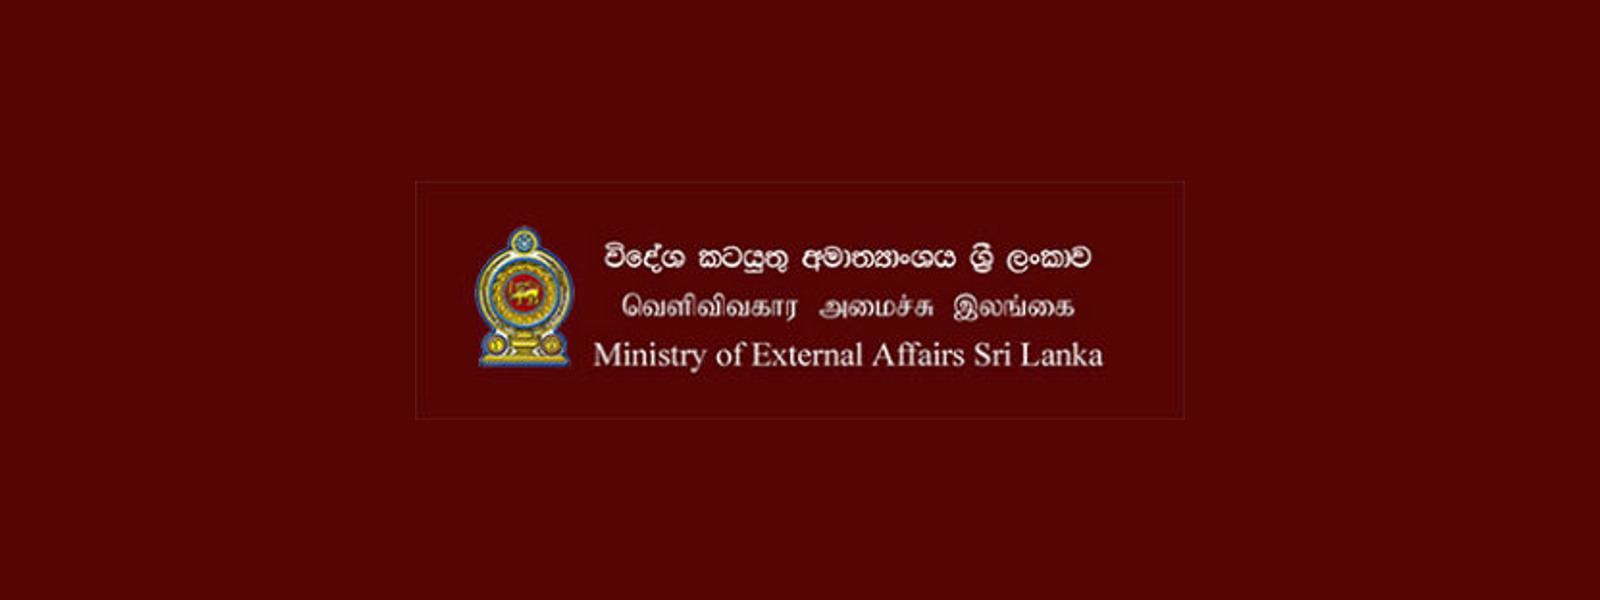 Consular Affairs division to resume services